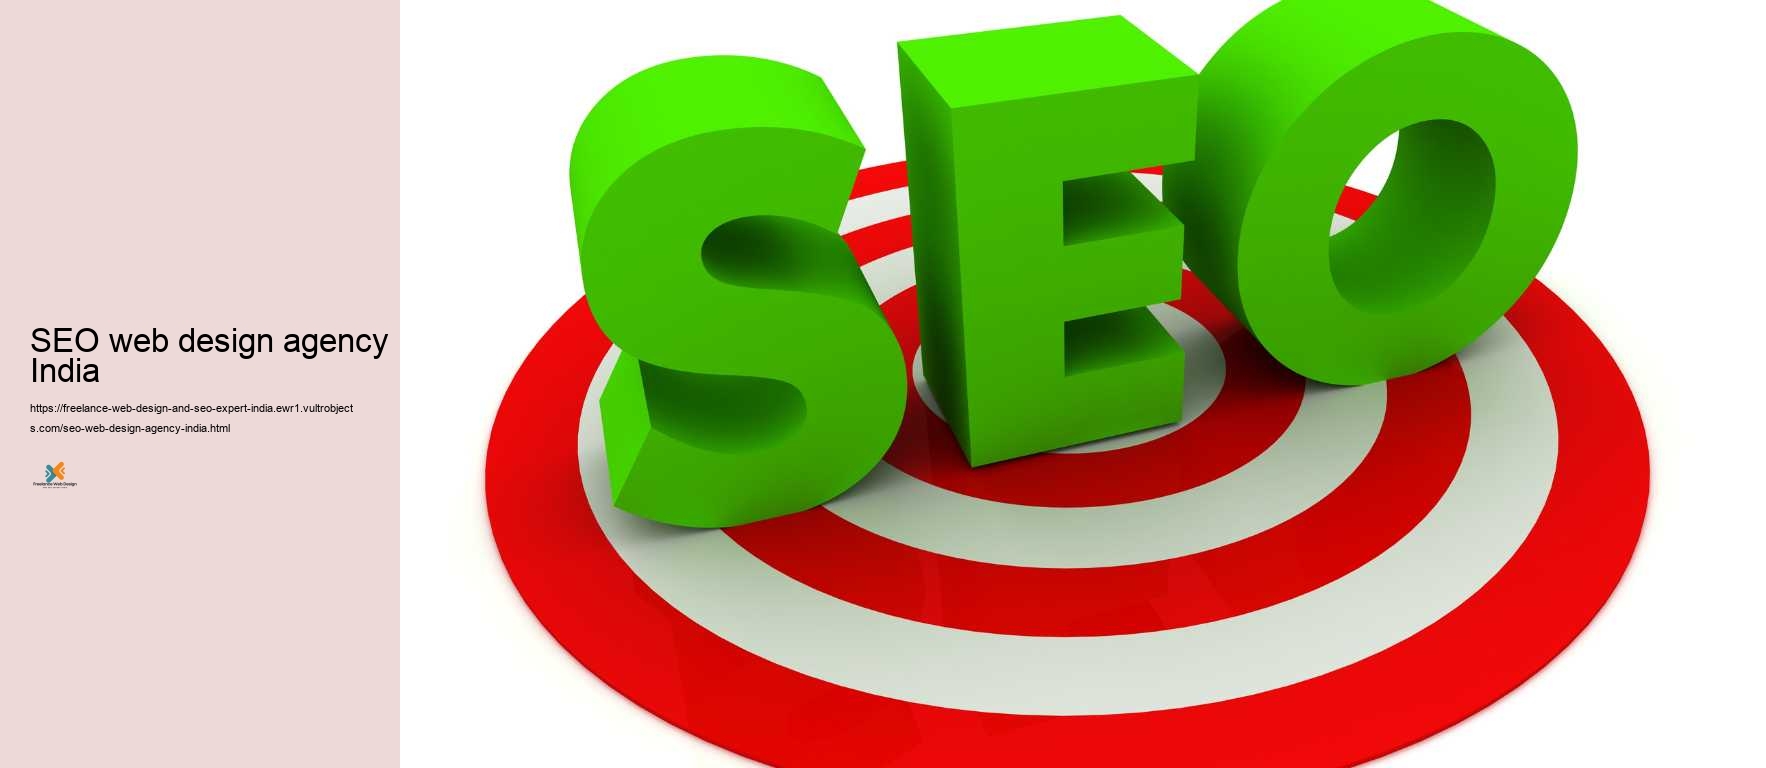 SEO web design agency India